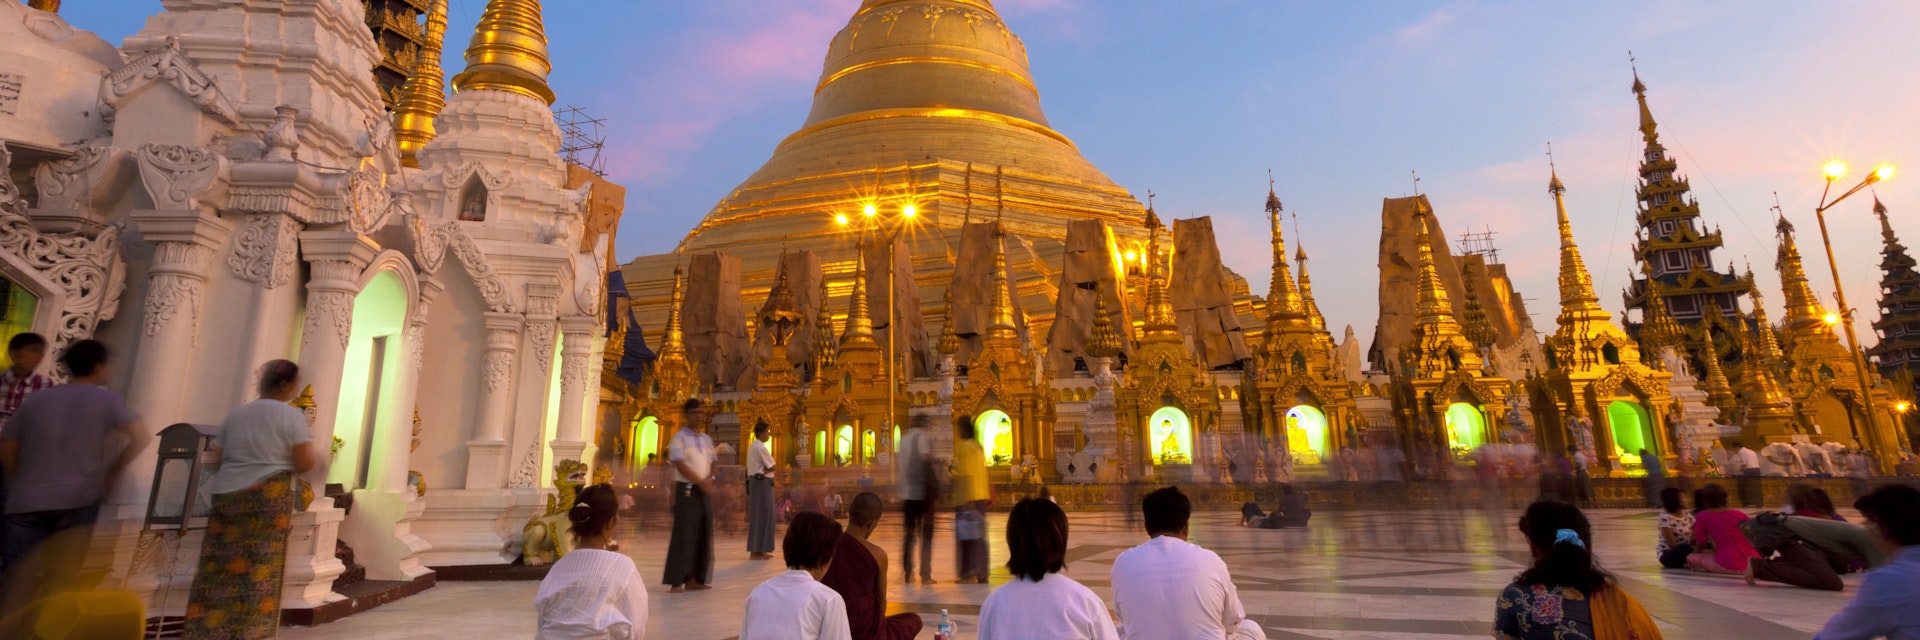 Shwedagon Paya (Pagoda) at dusk with Buddhist worshippers praying, Yangon (Rangoon), Myanmar (Burma), Asia